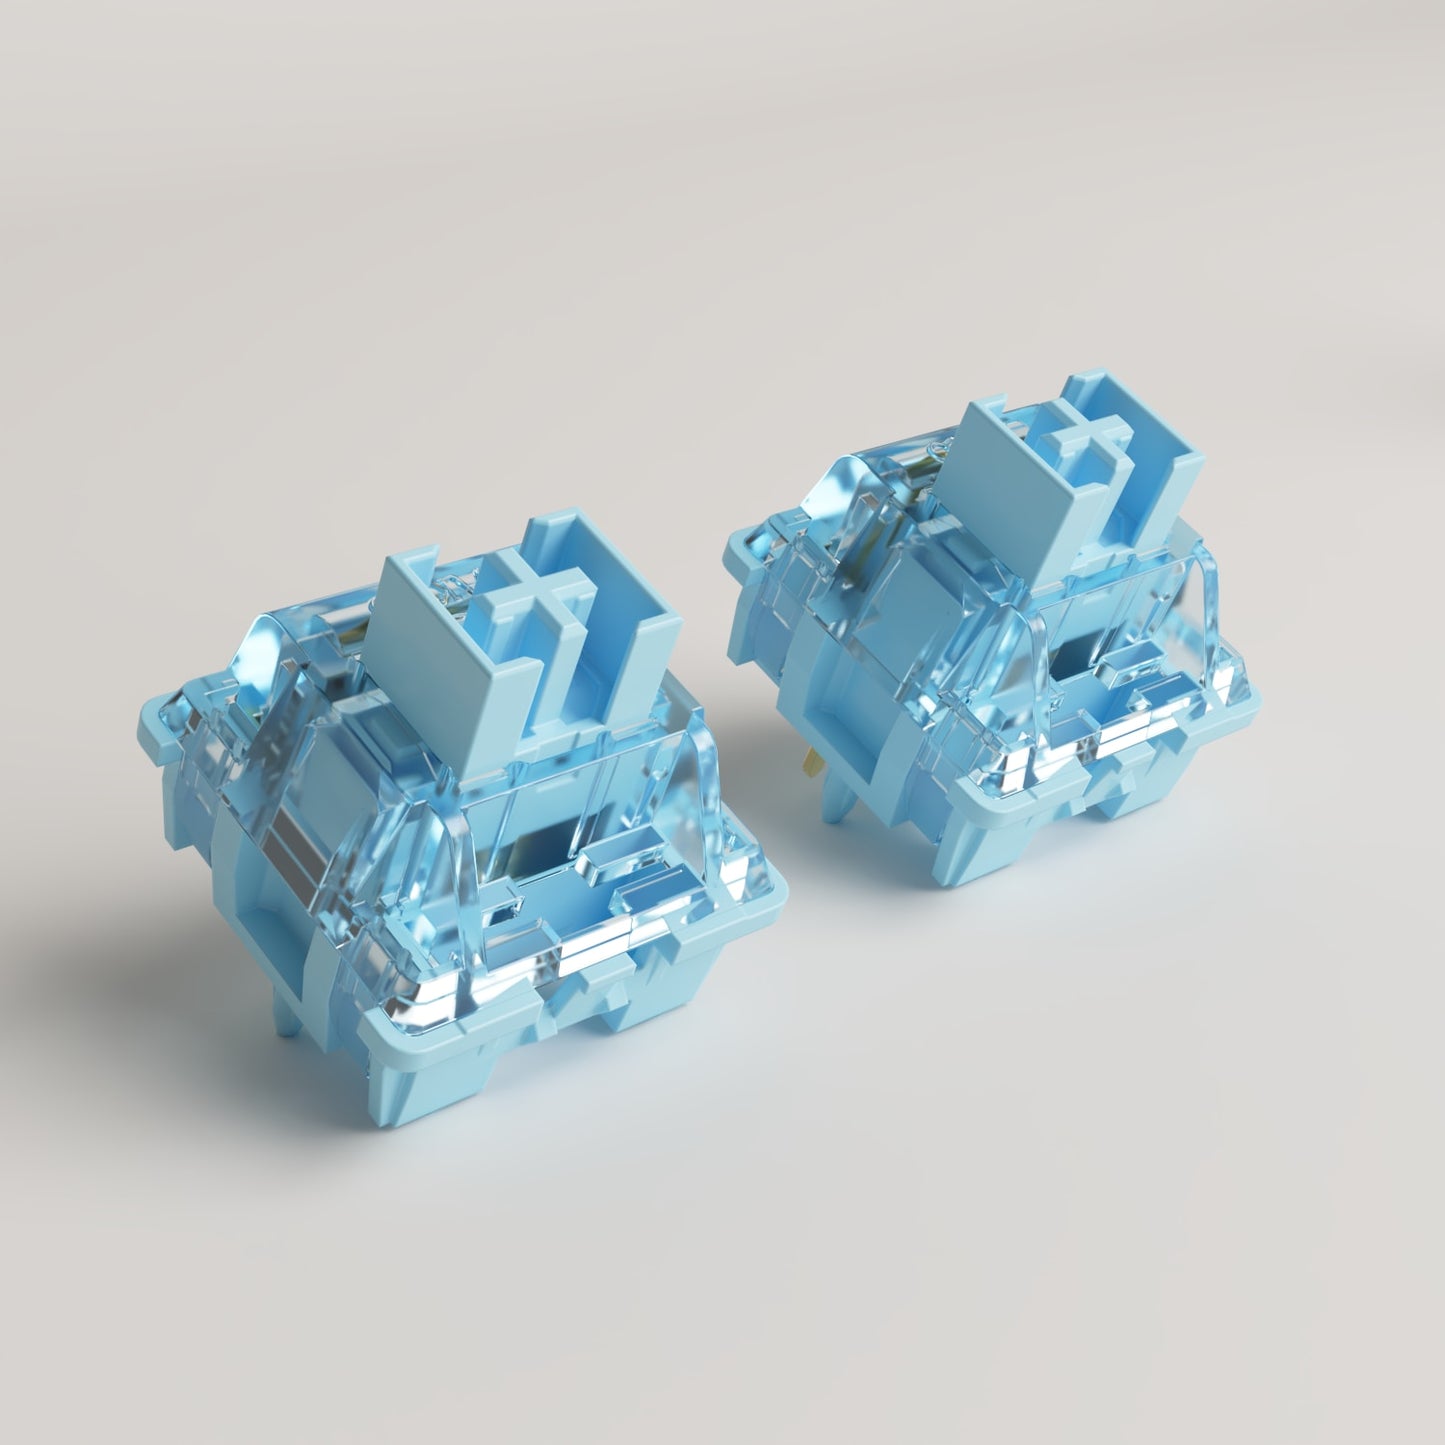 Akko V3/V3 Pro Cream Blue Switch 3 Pin 38gf مفتاح اللمس مع جذع مقاوم للغبار متوافق مع لوحة المفاتيح الميكانيكية MX 